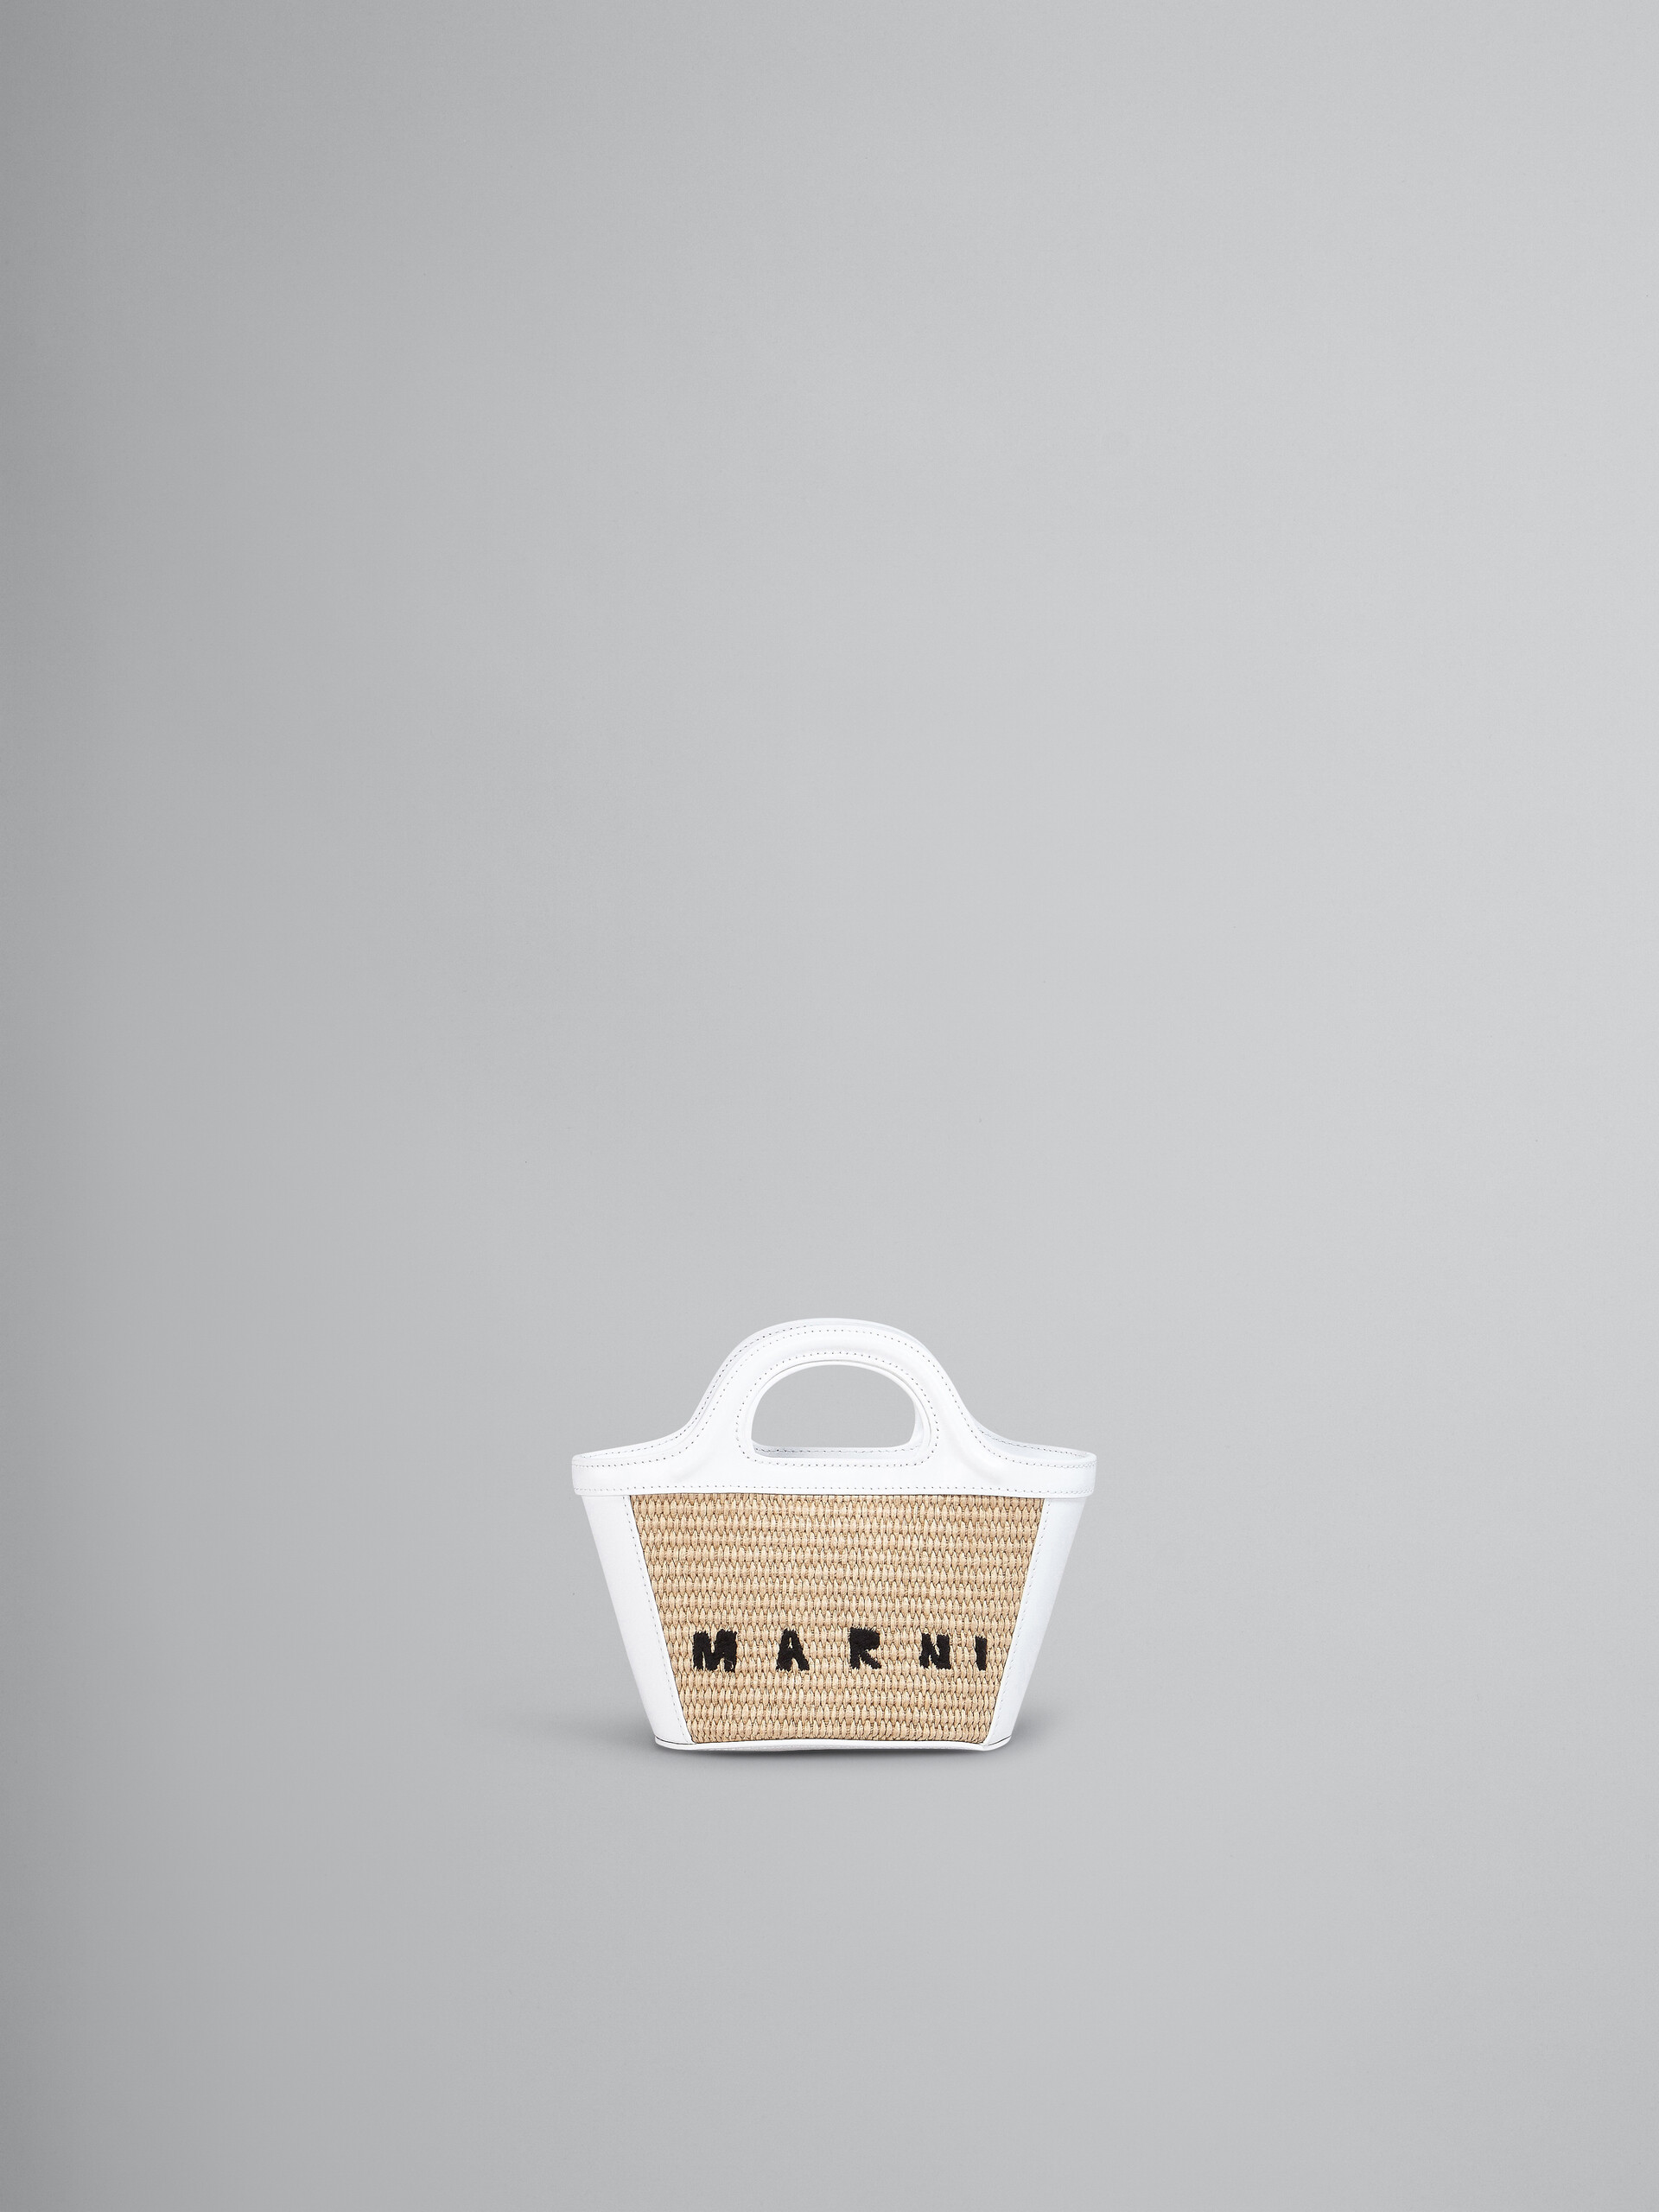 Tropicalia Micro Bag in white leather and raffia - Handbag - Image 1